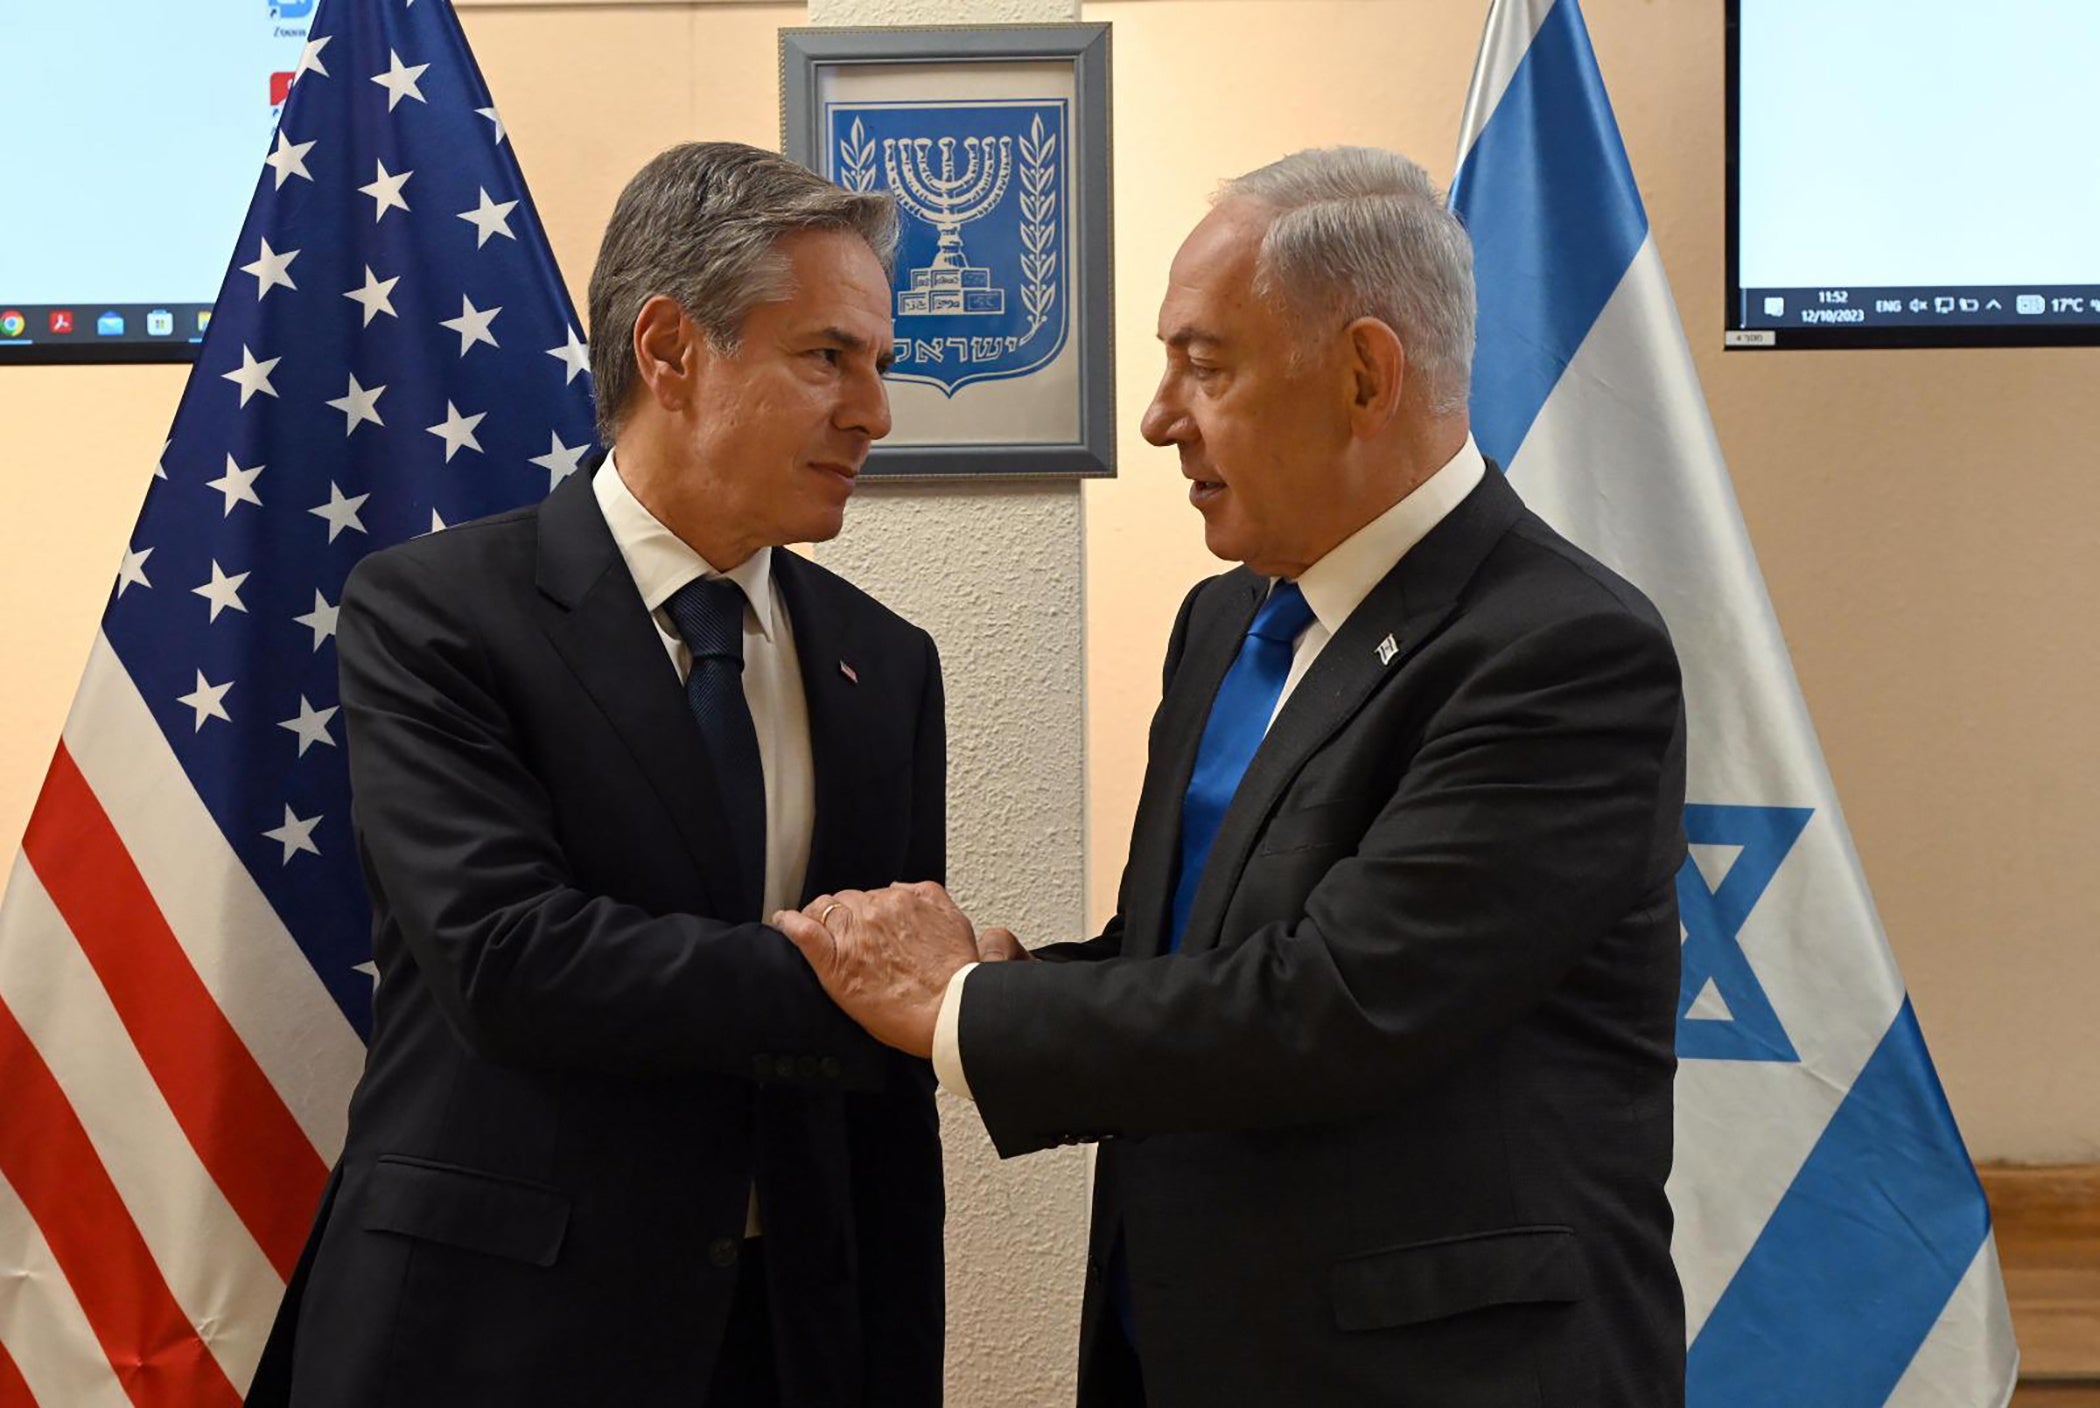 US secretary of state Antony Blinken and Israel’s prime minister Benjamin Netanyahu